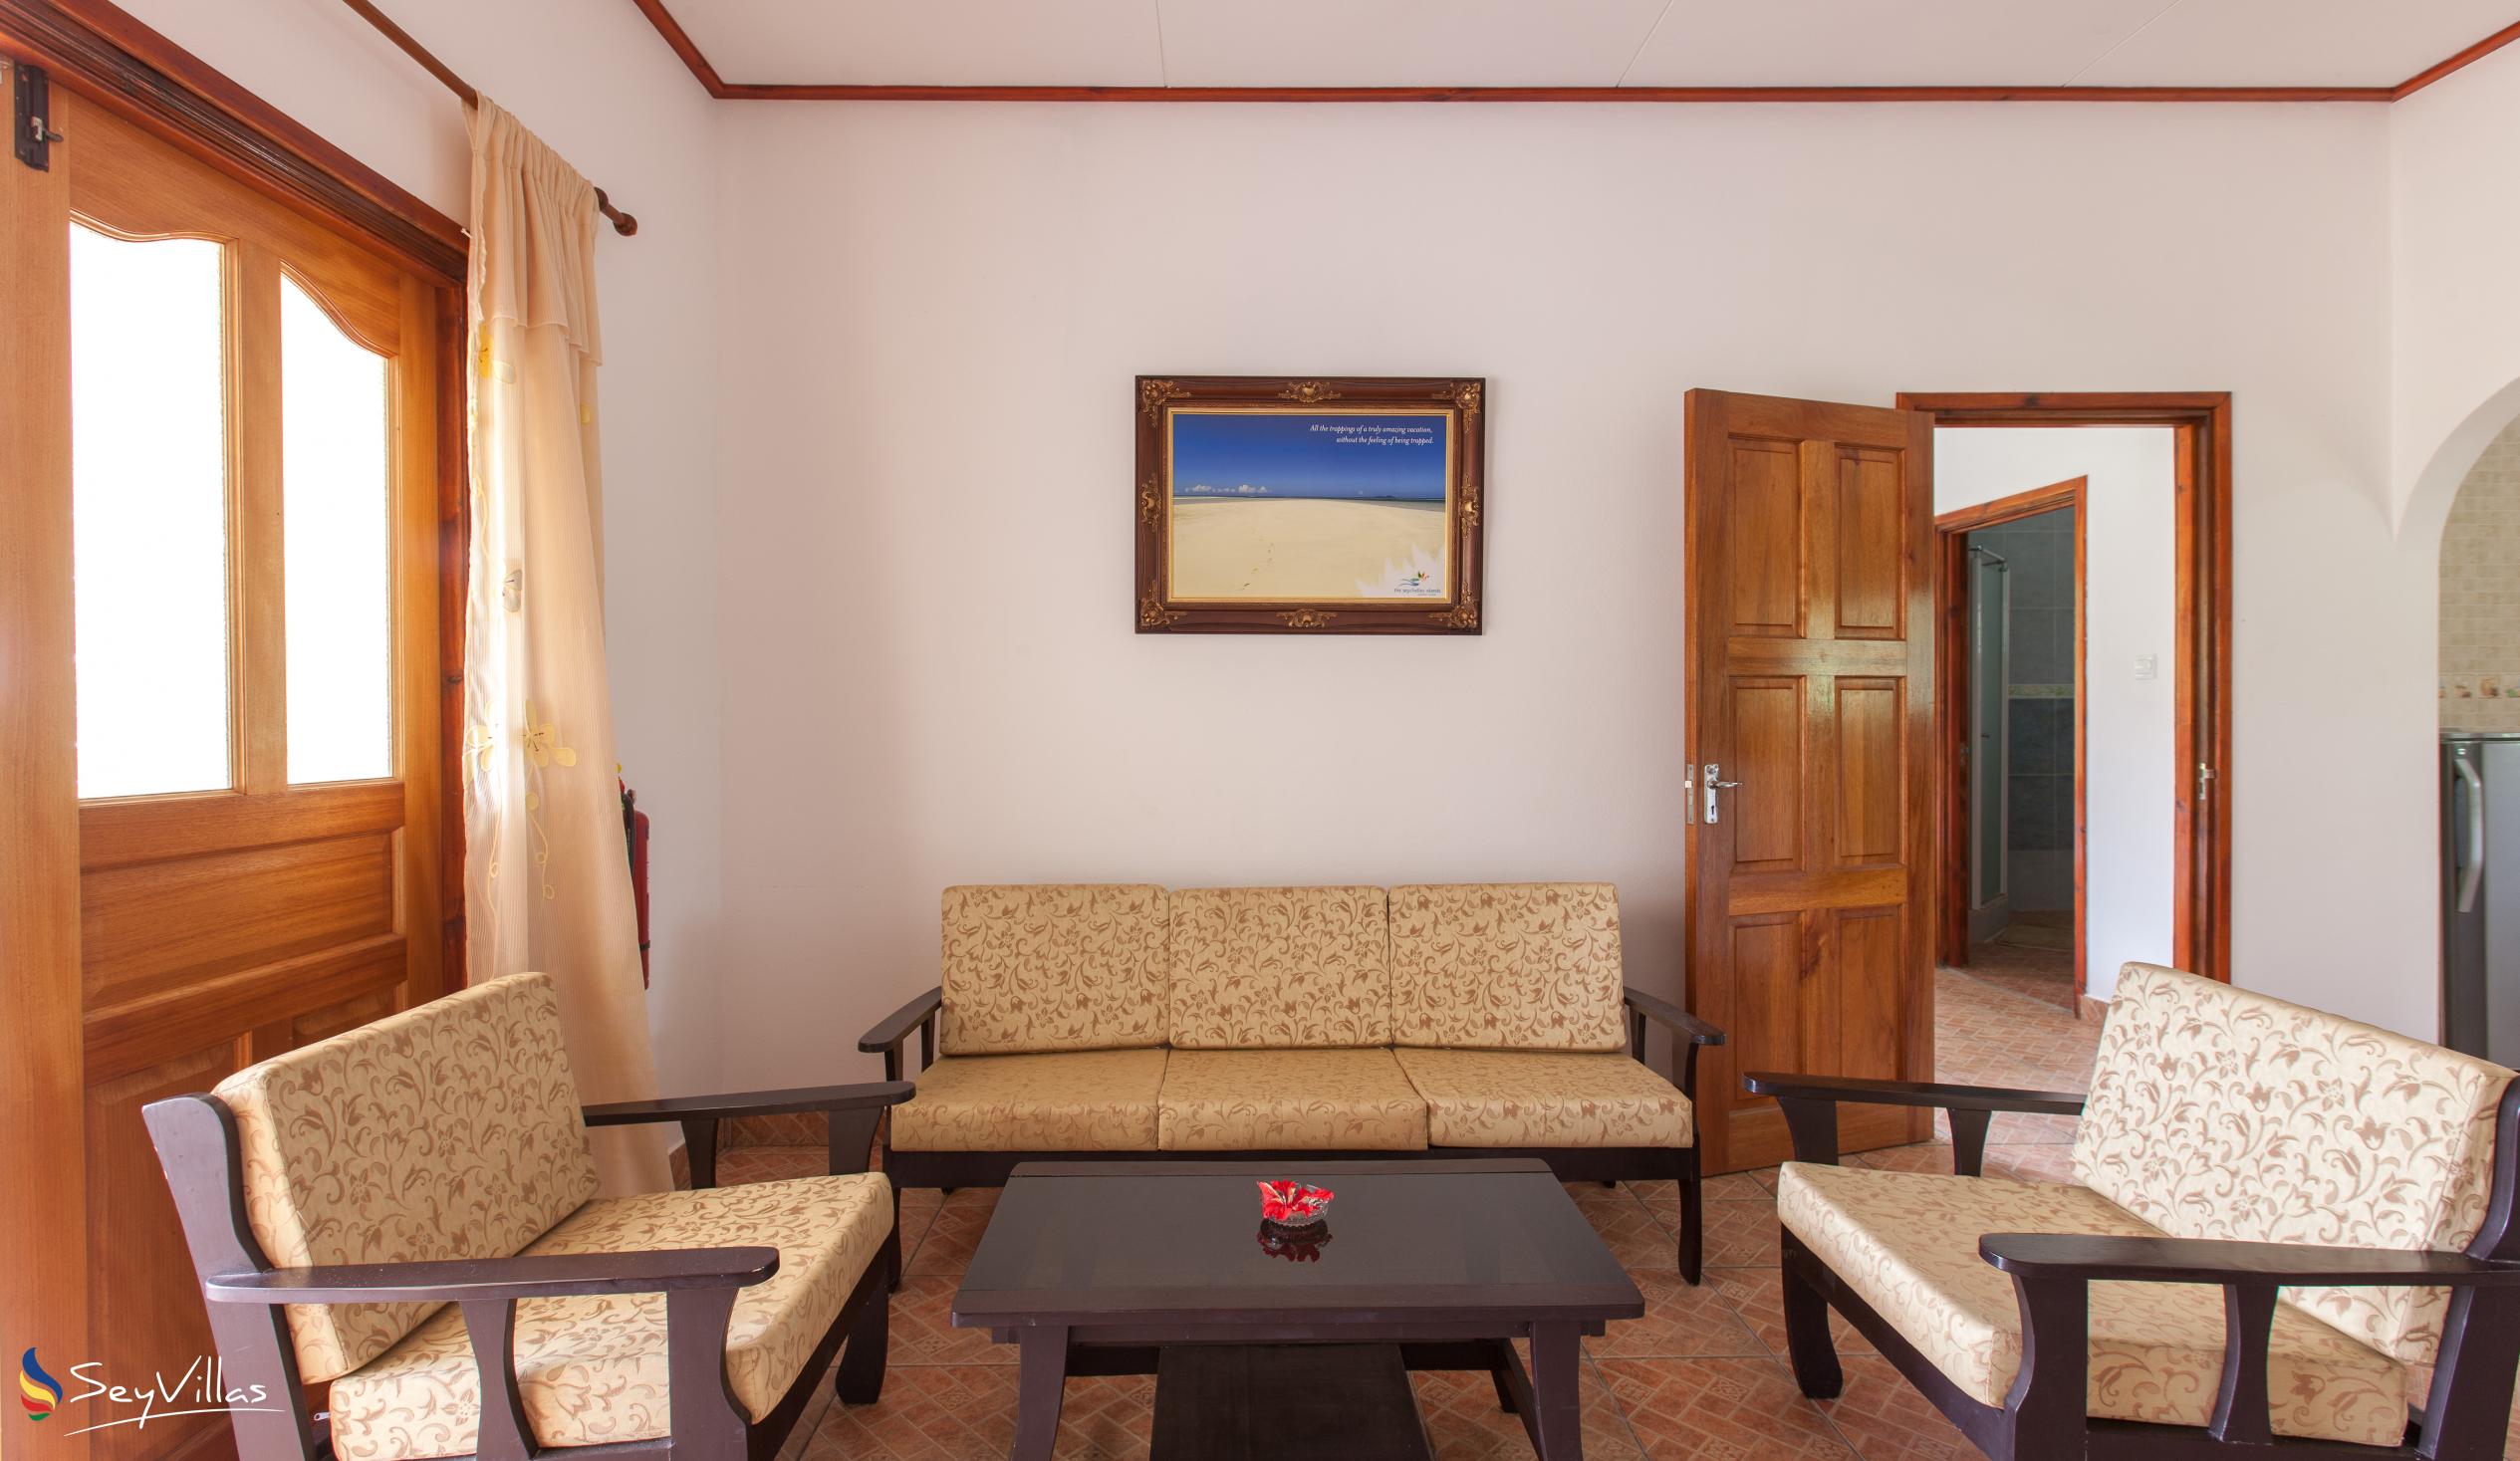 Foto 53: Zerof Self Catering  Apartments - Appartement à 3 chambres - La Digue (Seychelles)